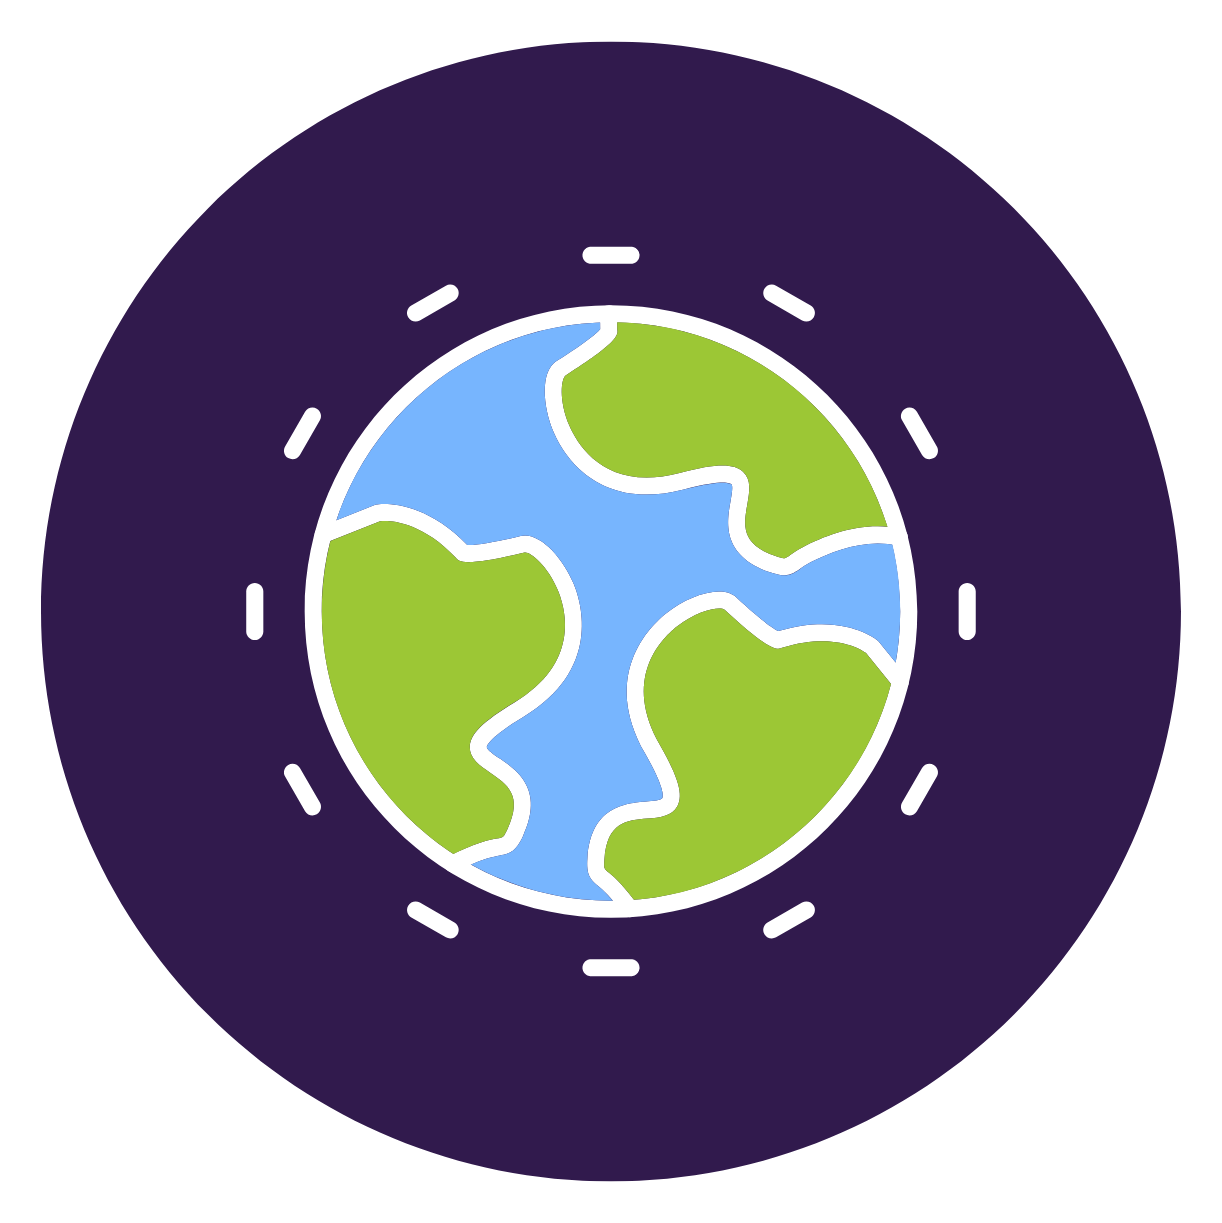 An icon with a cartoon globe in a purple circle